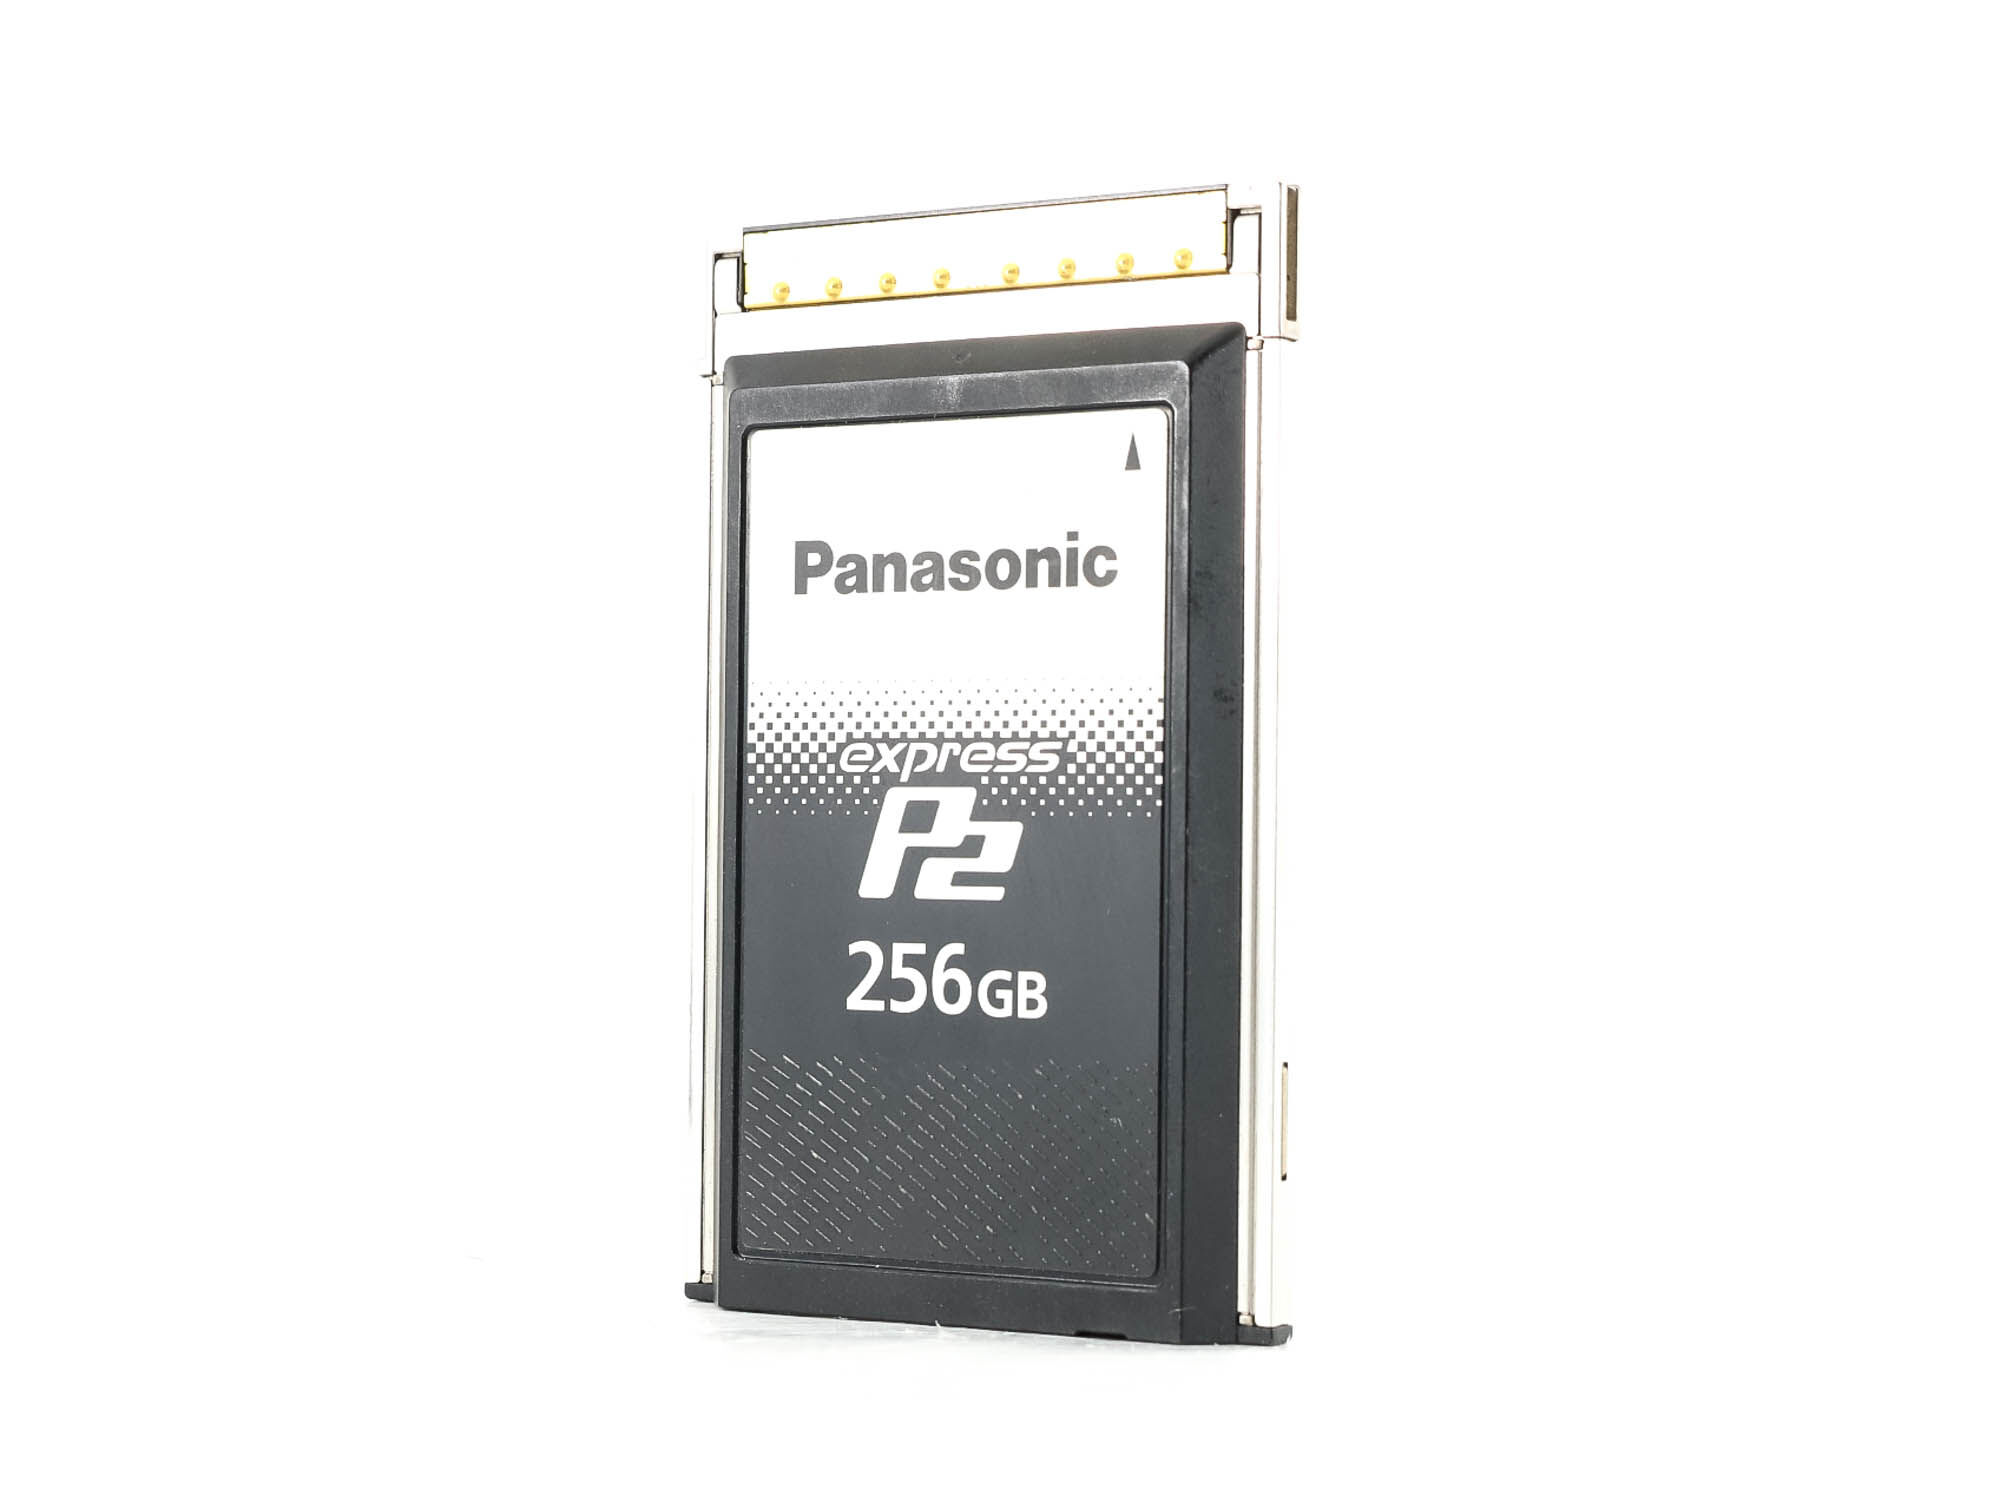 panasonic 256gb expressp2 memory card (condition: good)